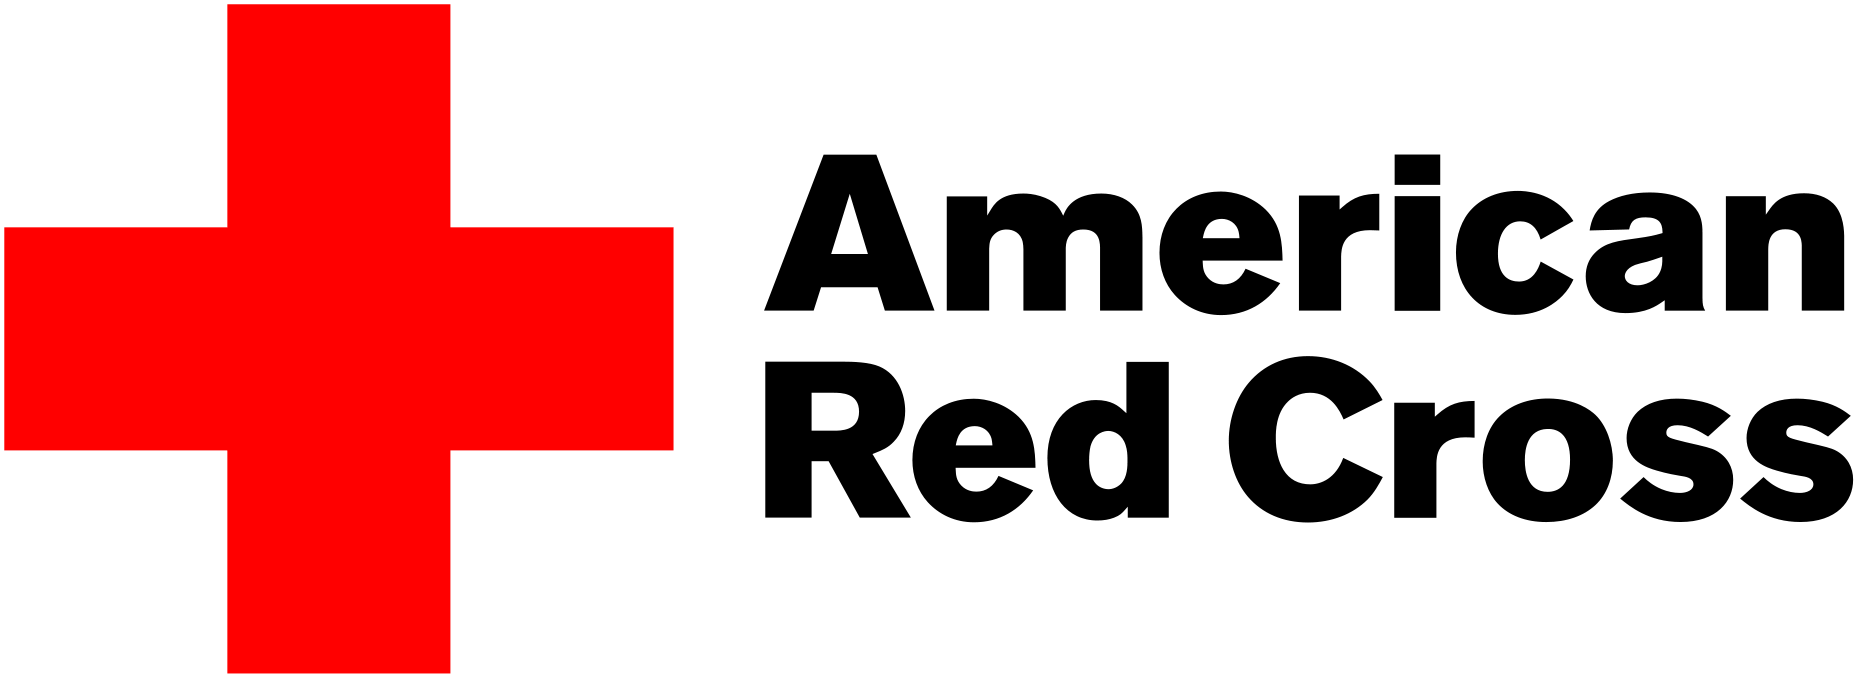 Red Medical Cross Logo - American Red Cross Logo, American Red Cross Symbol, Meaning, History